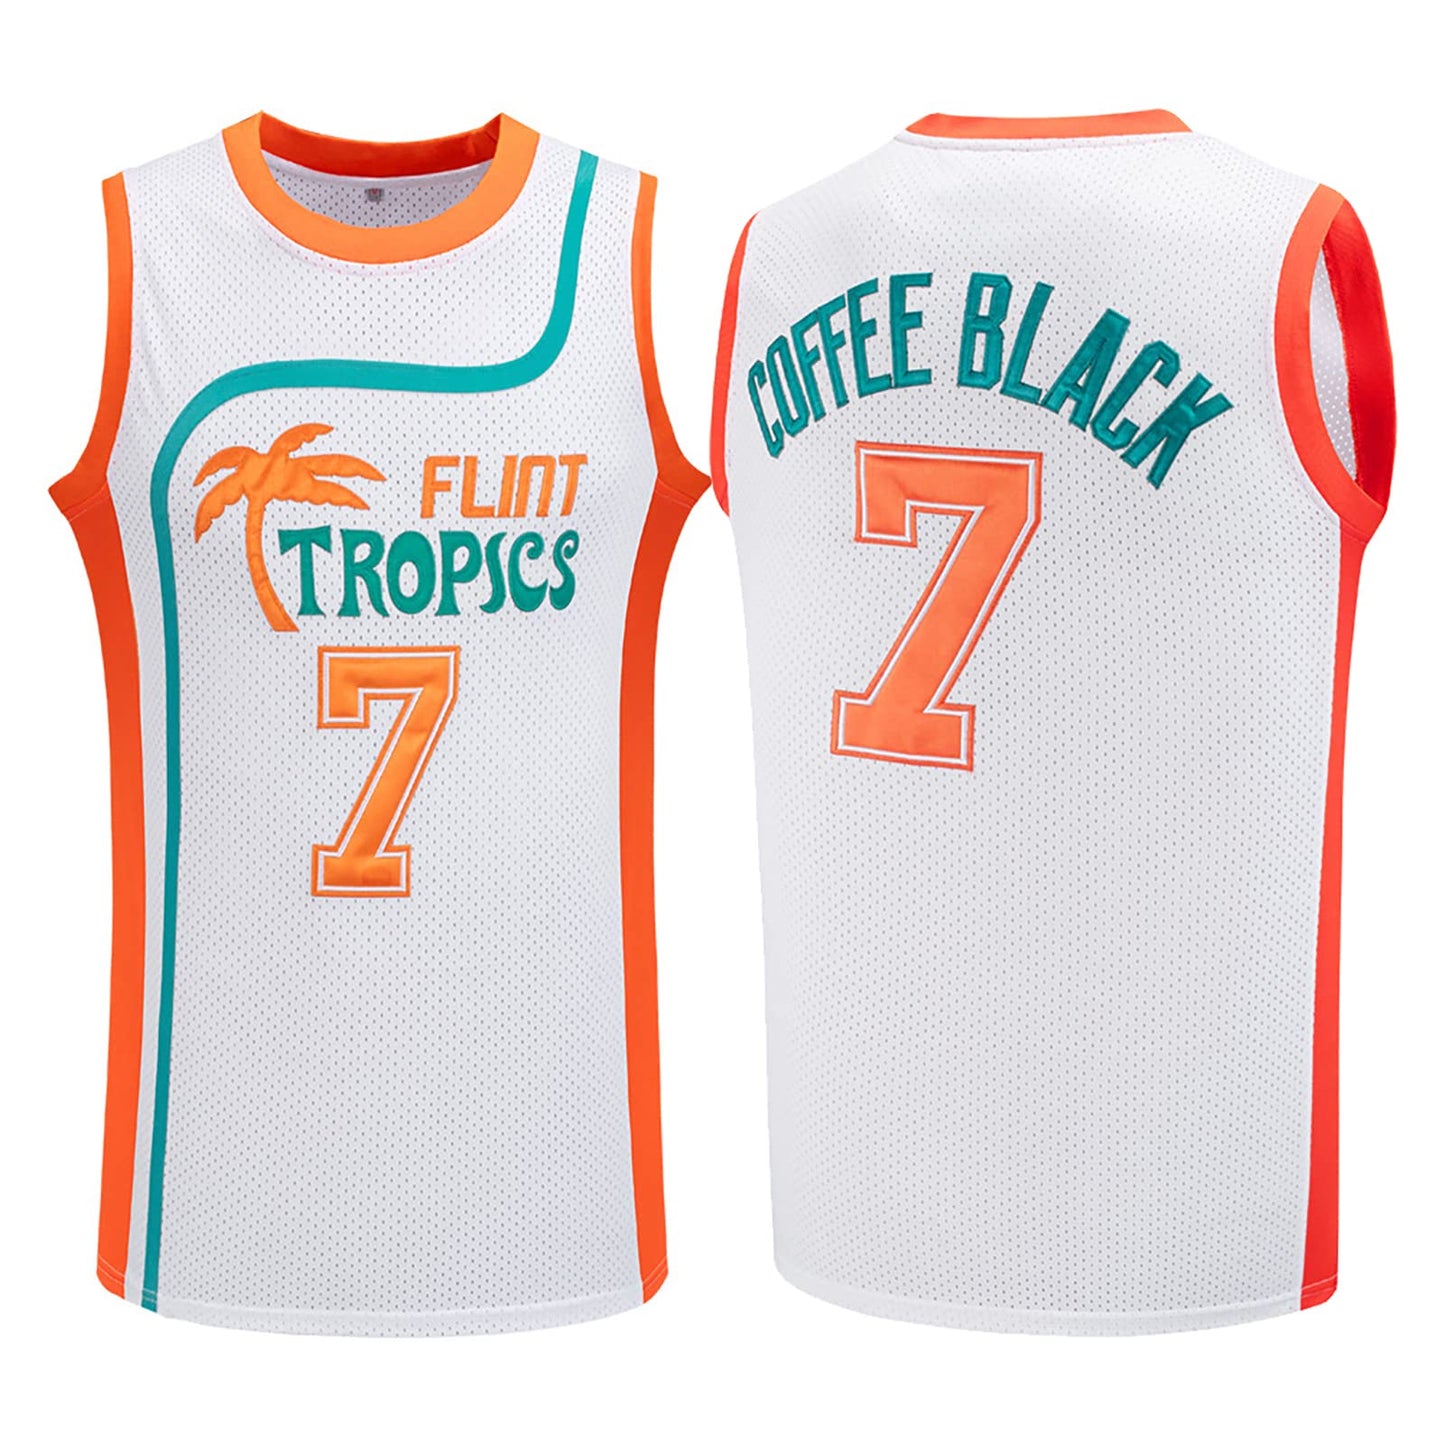 Coffee Black Jersey 7 Flint Tropics Basketball Jersey 33 Jackie Moon Jersey - Opticdeals